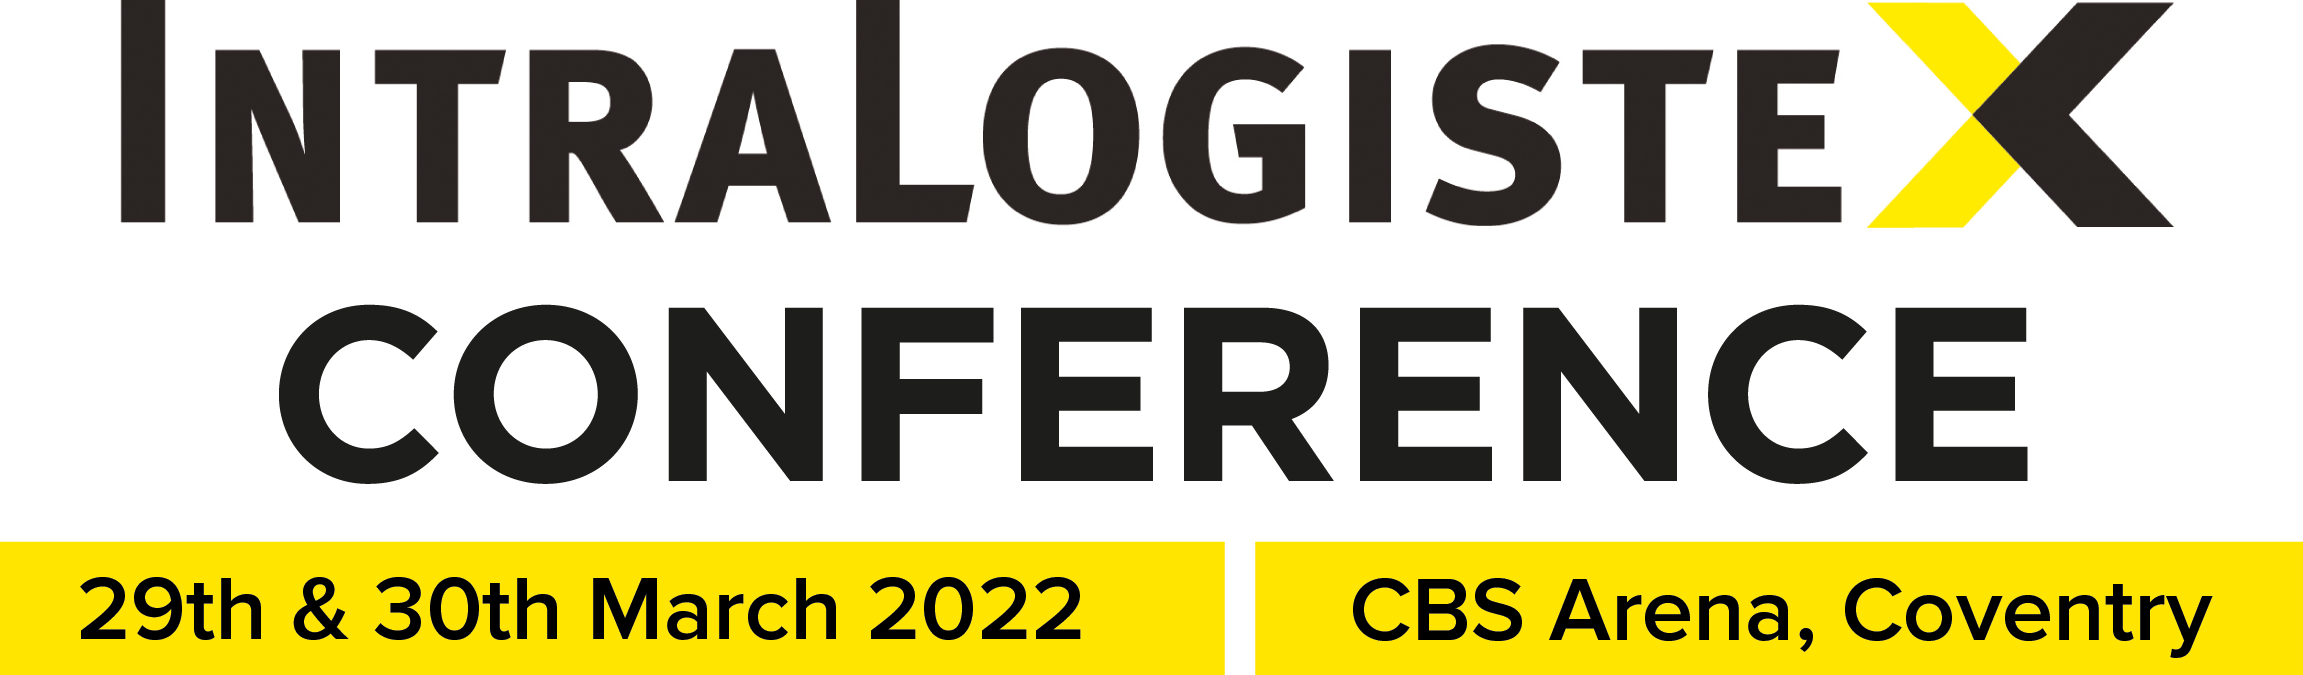 Intralogistex Conference Logo